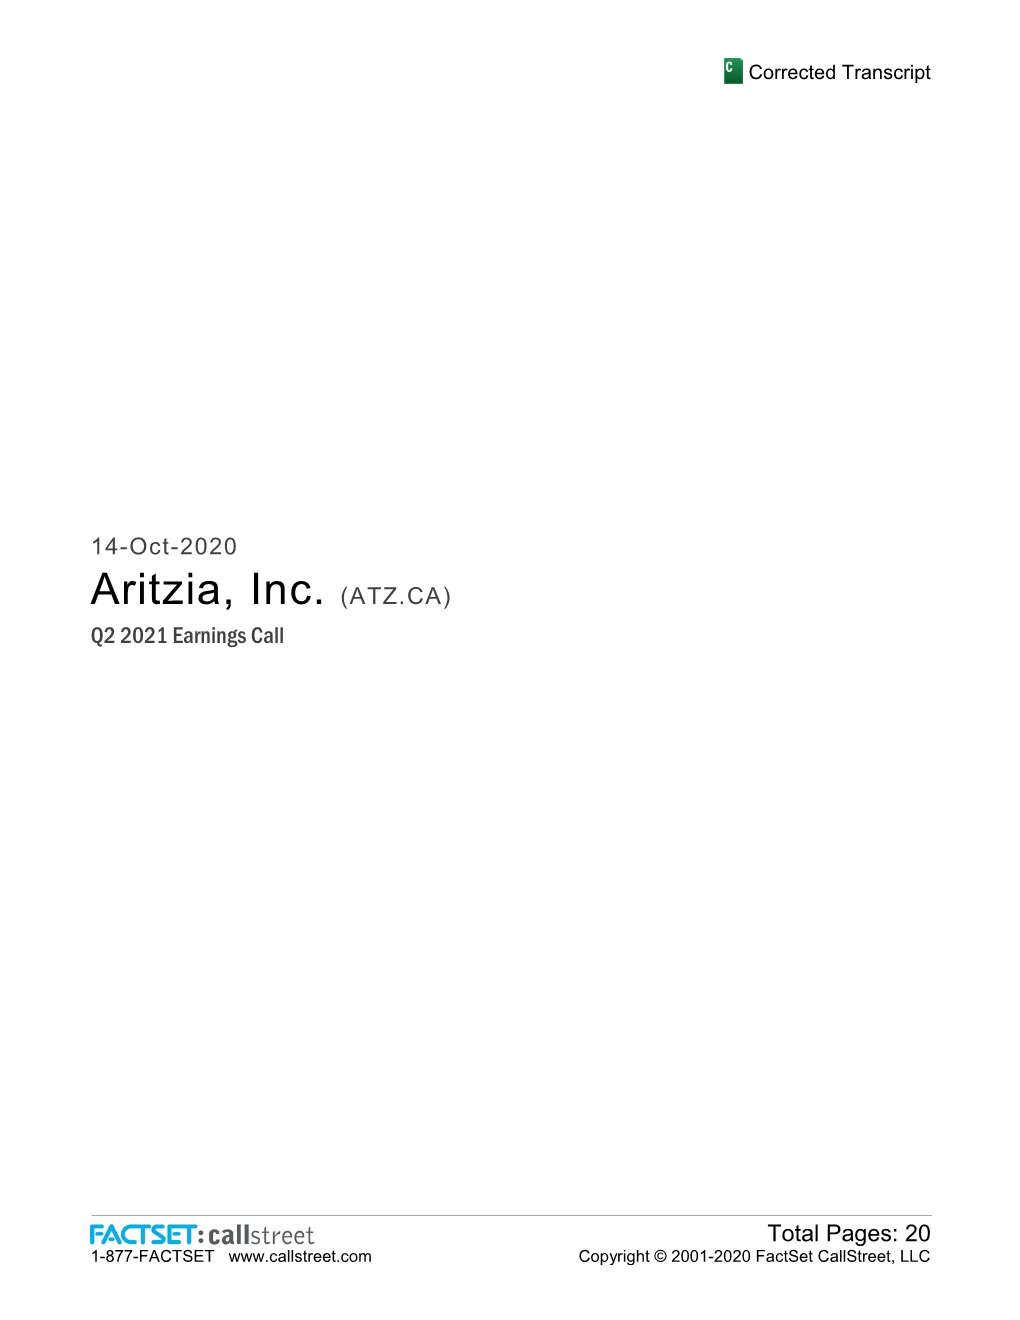 Aritzia, Inc. (ATZ.CA) Q2 2021 Earnings Call